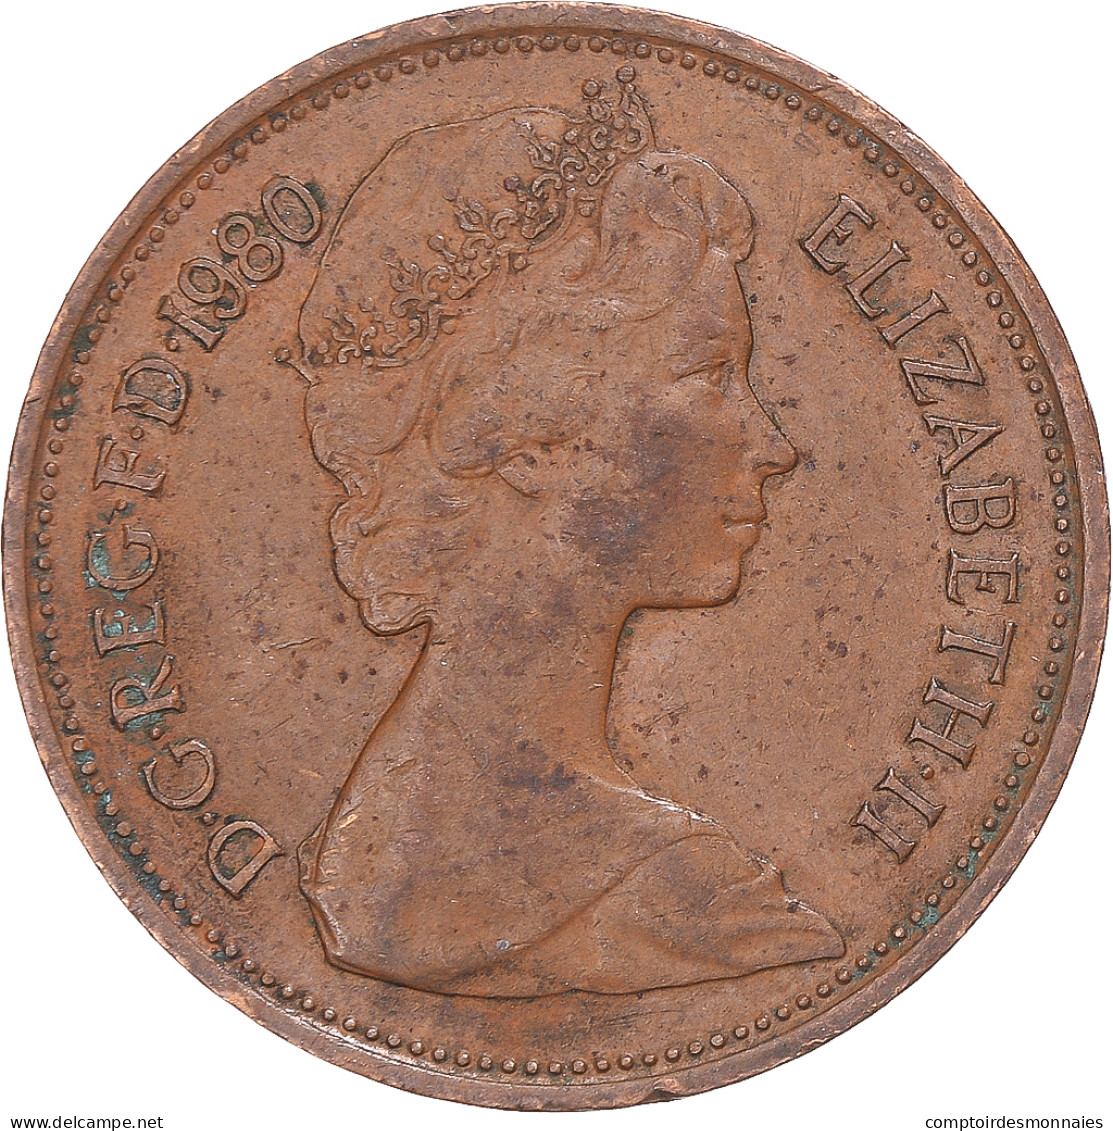 Monnaie, Grande-Bretagne, 2 New Pence, 1980 - 2 Pence & 2 New Pence